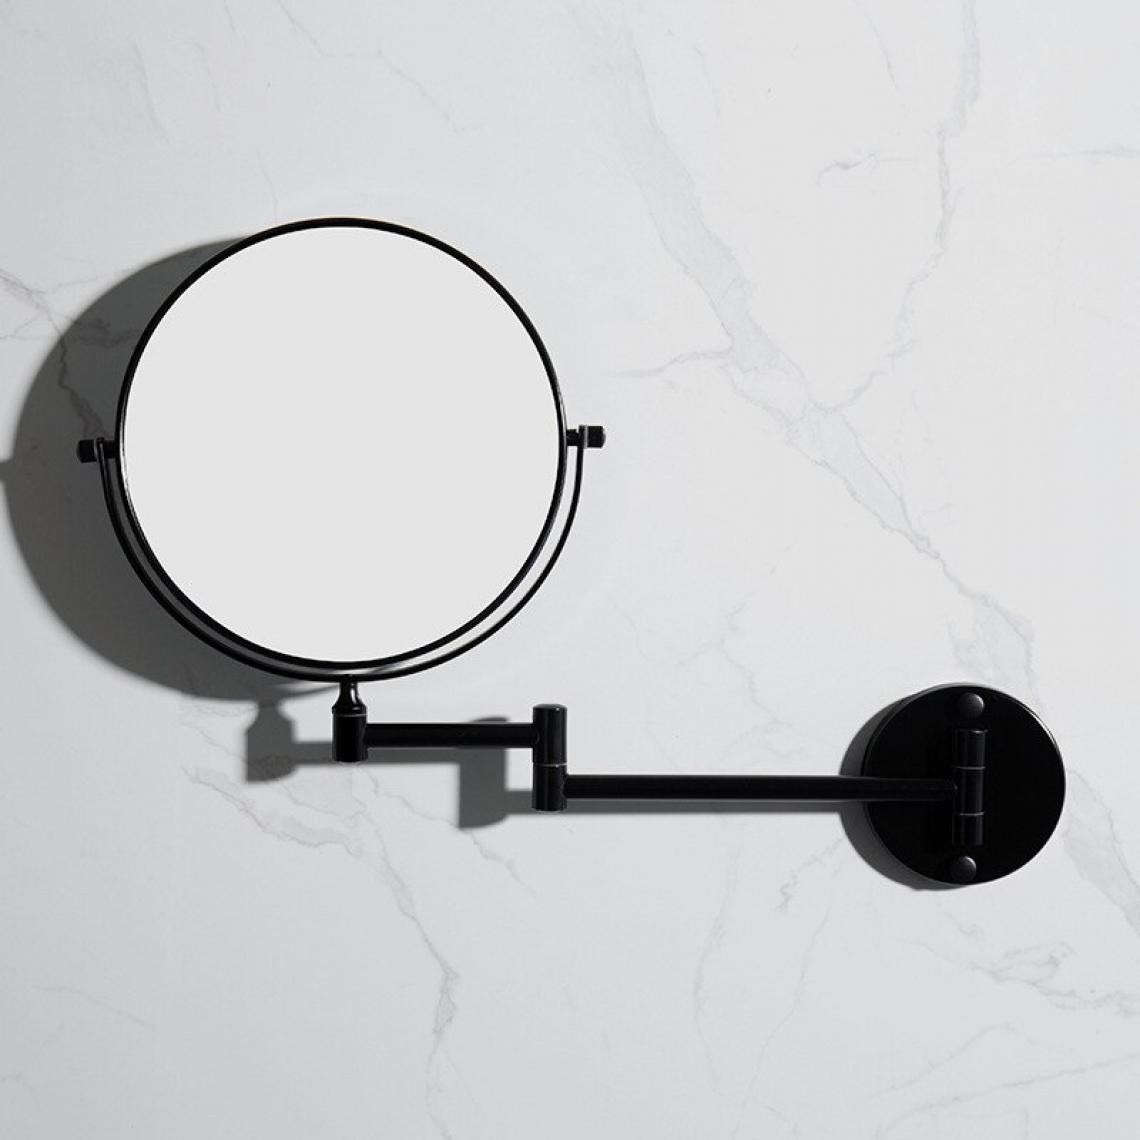 Universal - Salle de bains miroir noir installation murale miroir de maquillage salle de bains miroir de beauté loupe pliante miroir mural suspendu |(Le noir) - Miroir de salle de bain